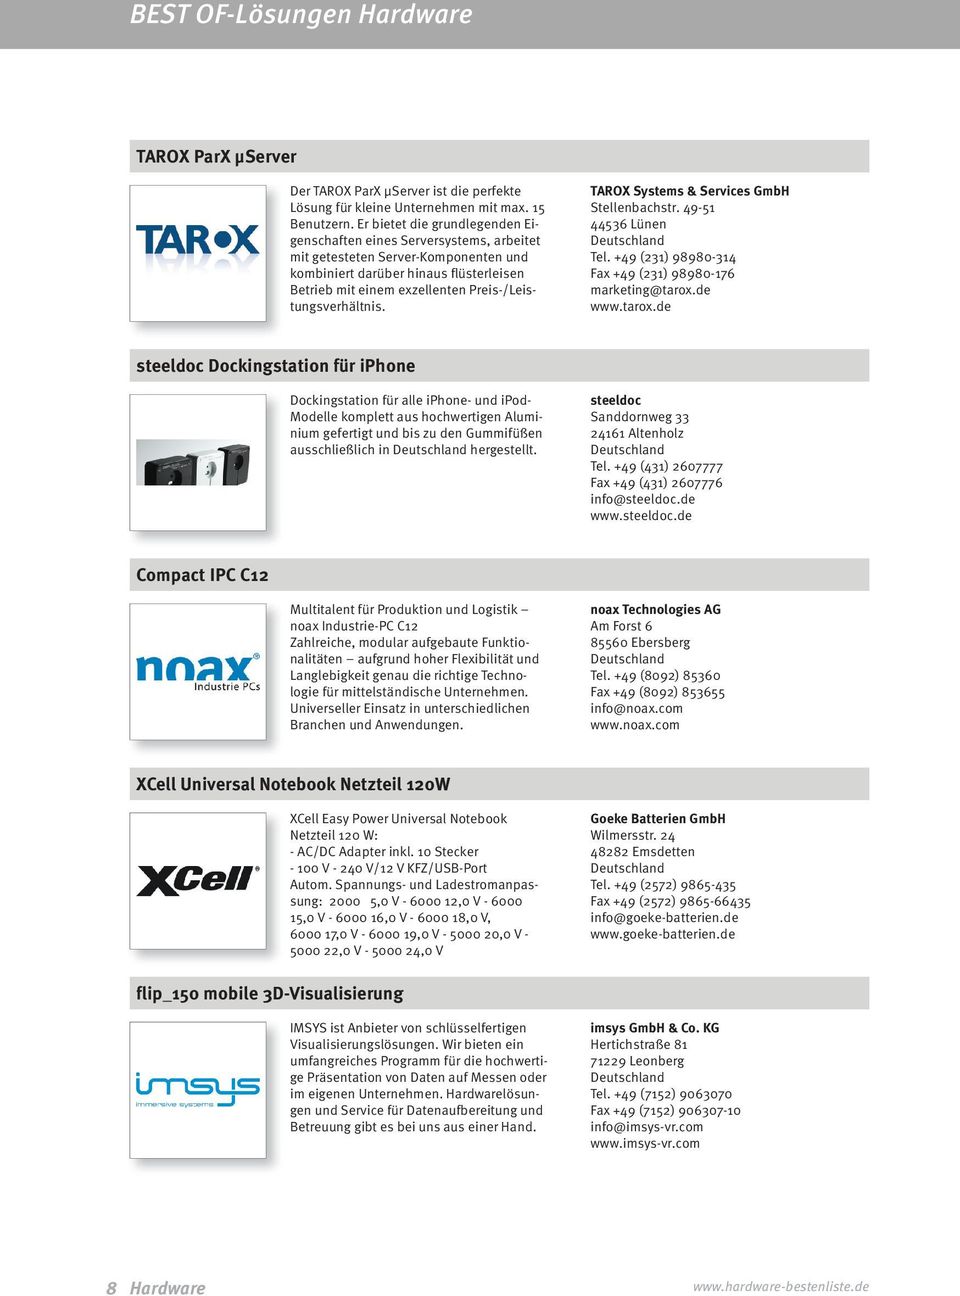 Preis-/Leistungsverhältnis. TAROX Systems & Services GmbH Stellenbachstr. 49-51 44536 Lünen Tel. +49 (231) 98980-314 Fax +49 (231) 98980-176 marketing@tarox.